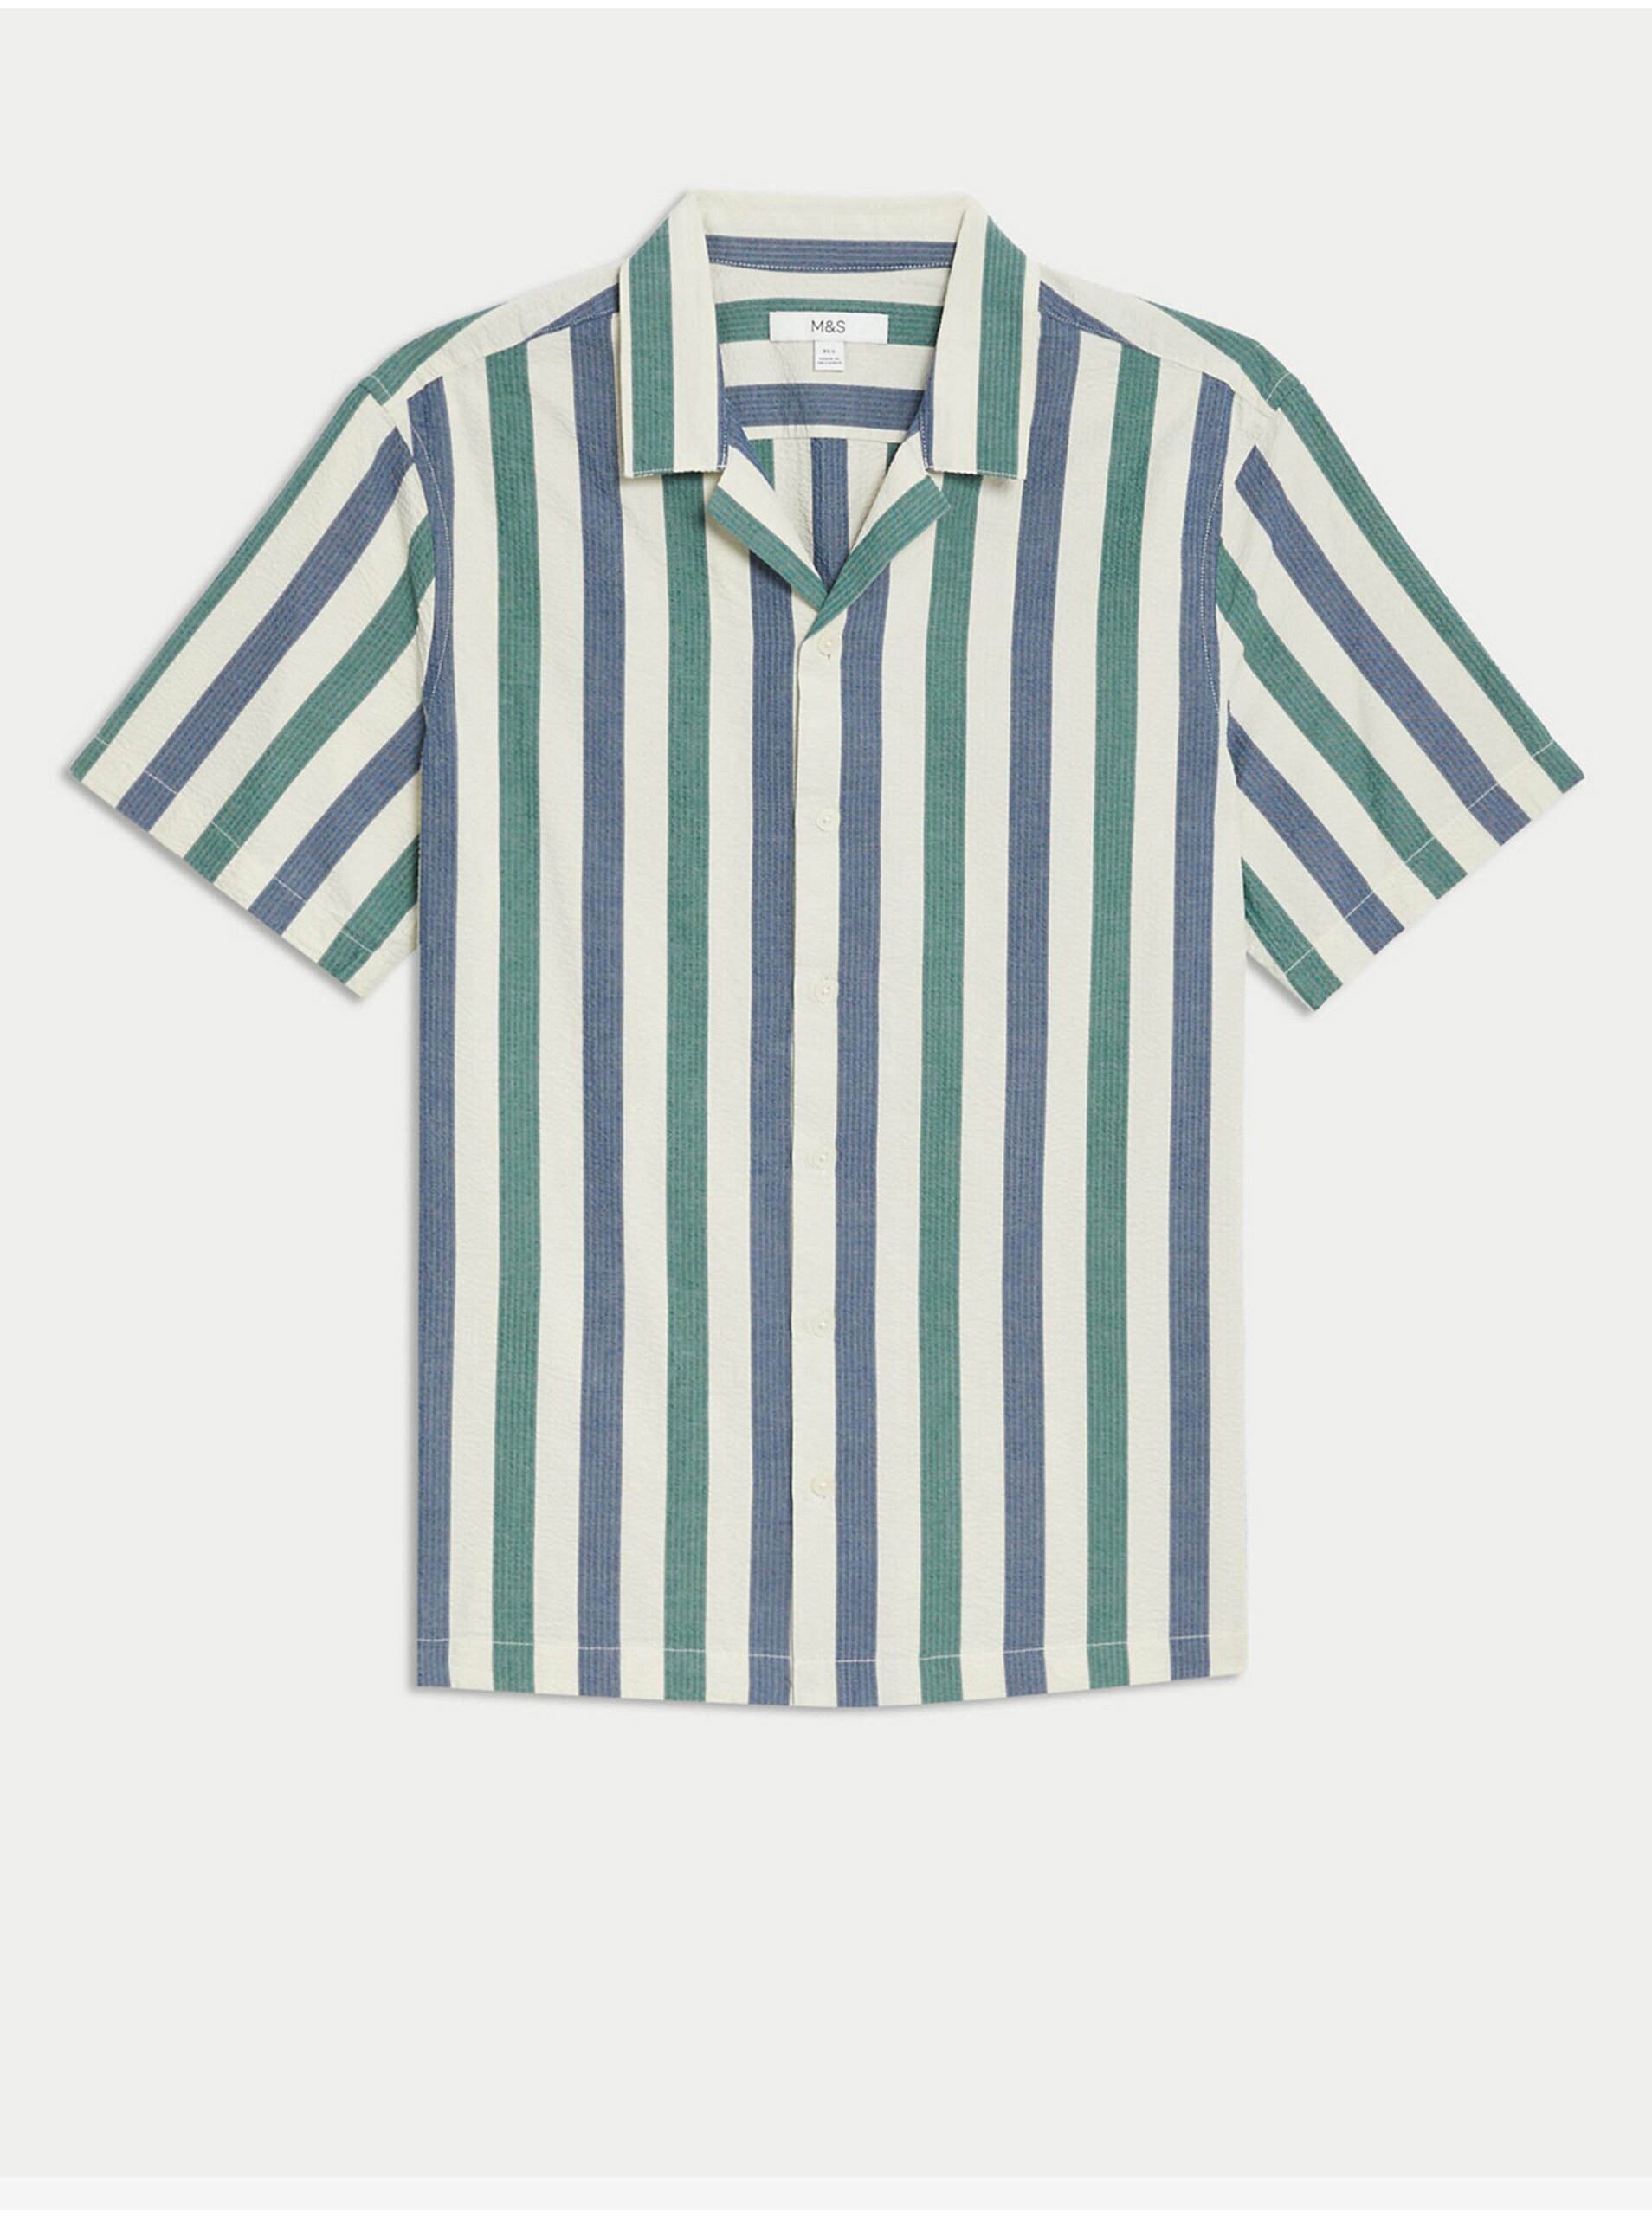 Lacno Zelená pánska pruhovaná košeľa Marks & Spencer